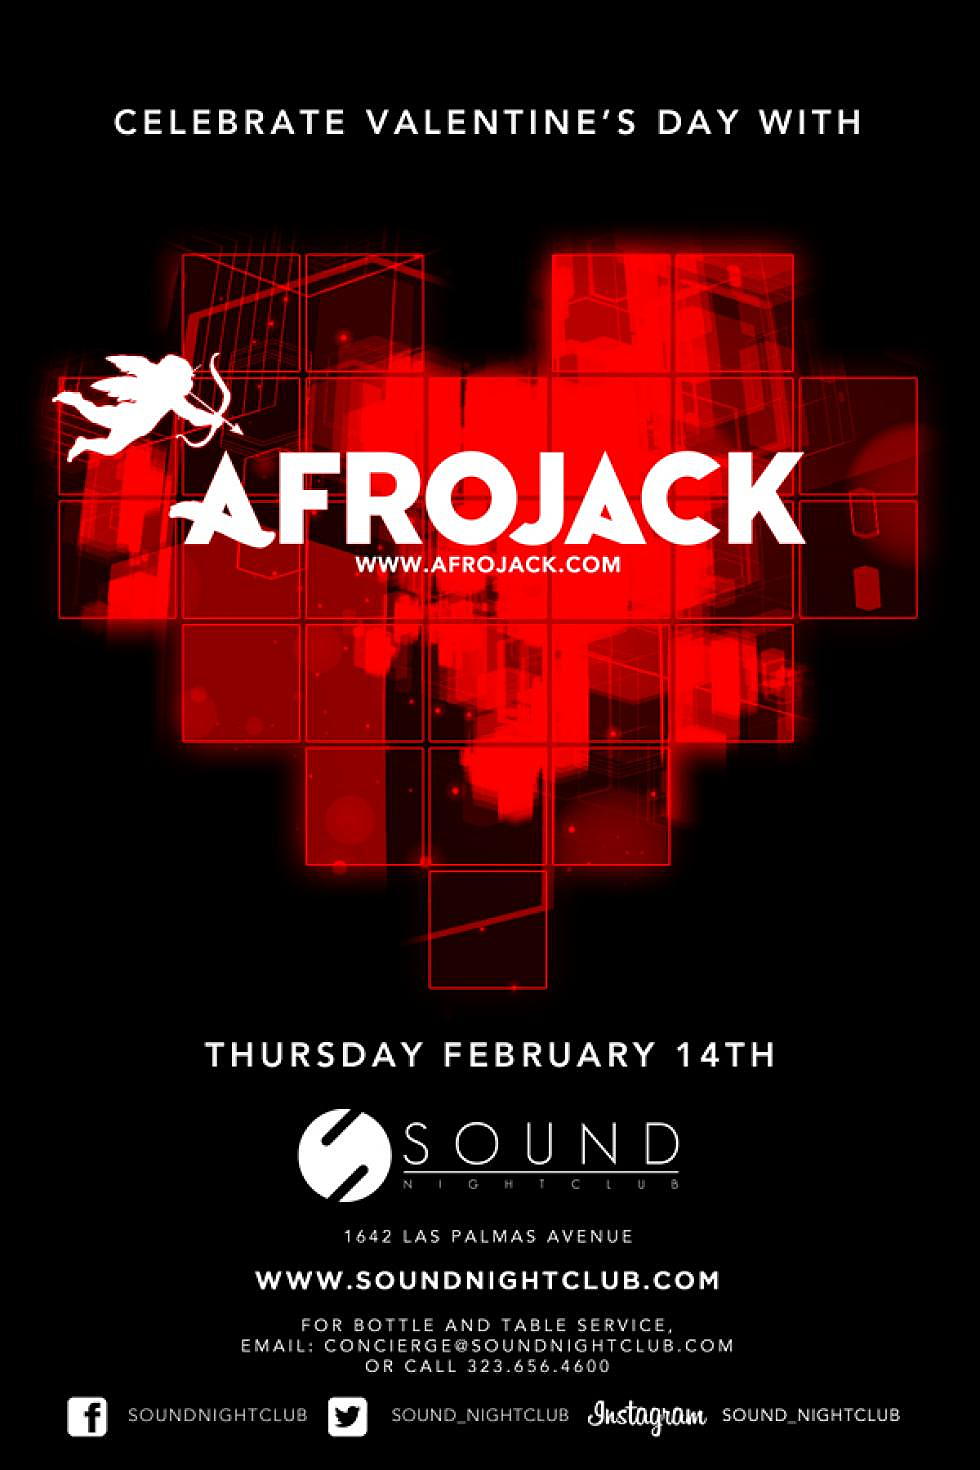 elektro presents: Win 2 tickets to Afrojack at Sound Nightclub in LA on Valentines Day